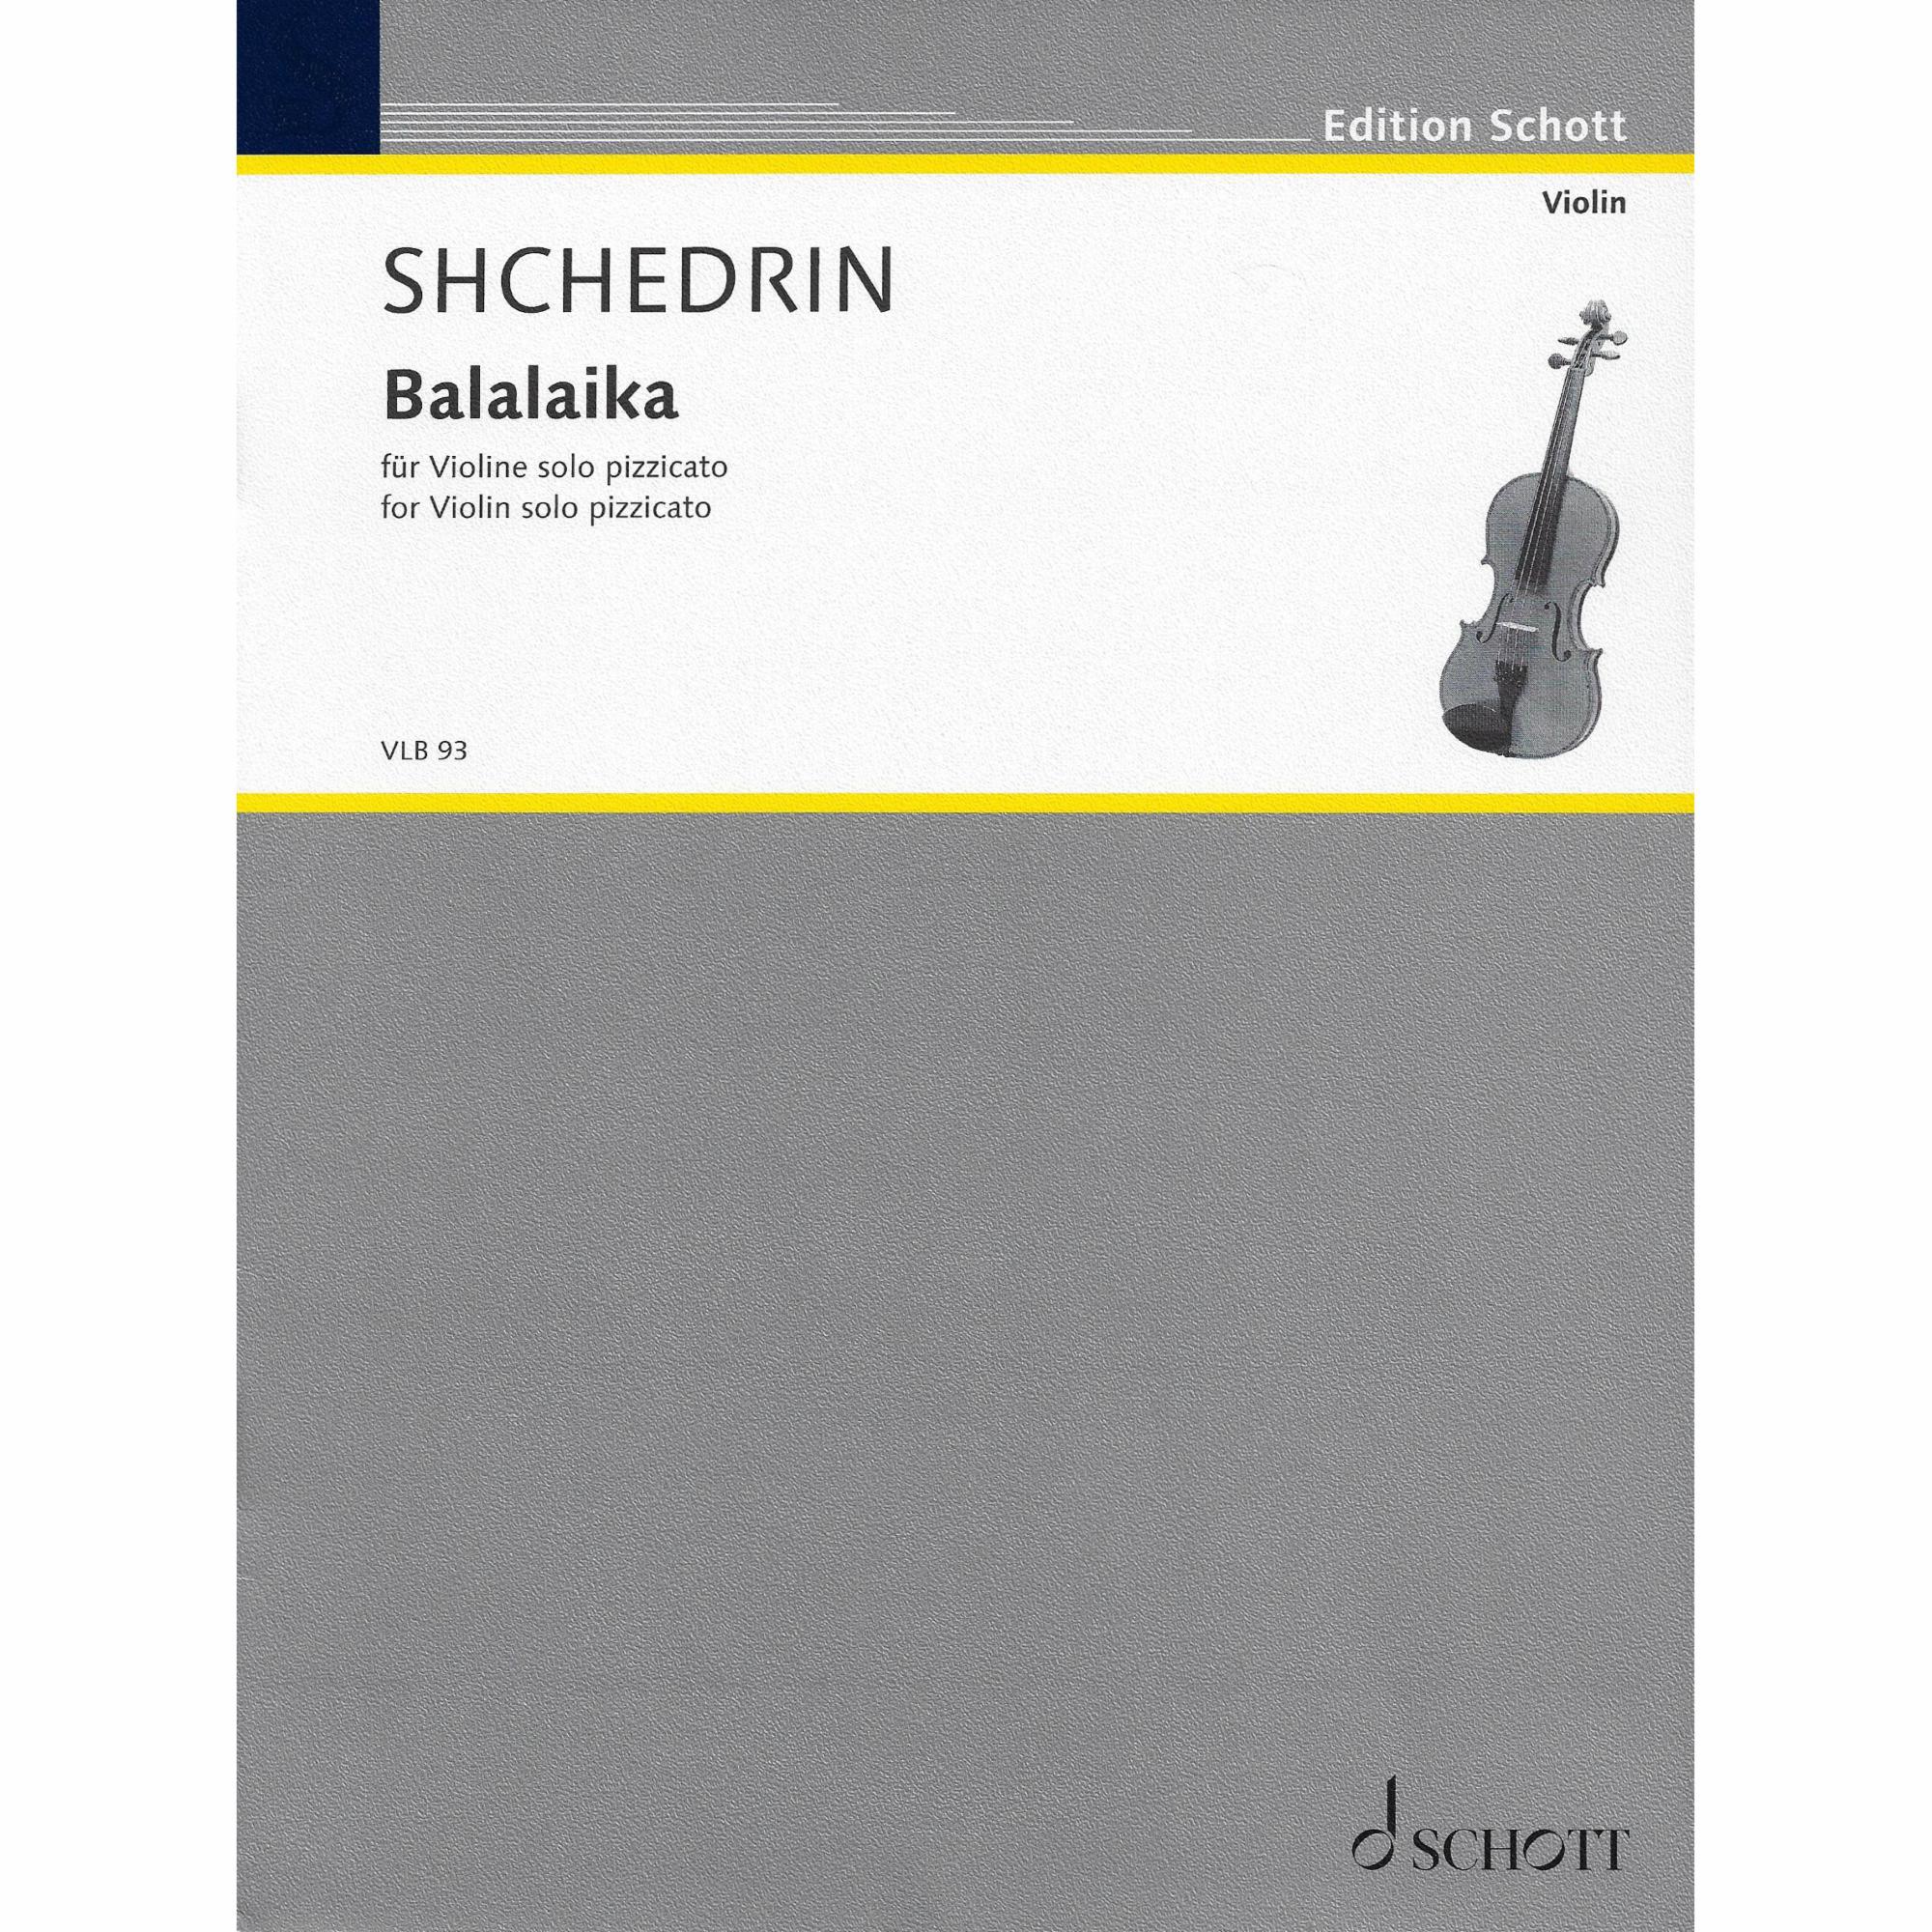 Shchedrin -- Balalaika for Solo Violin